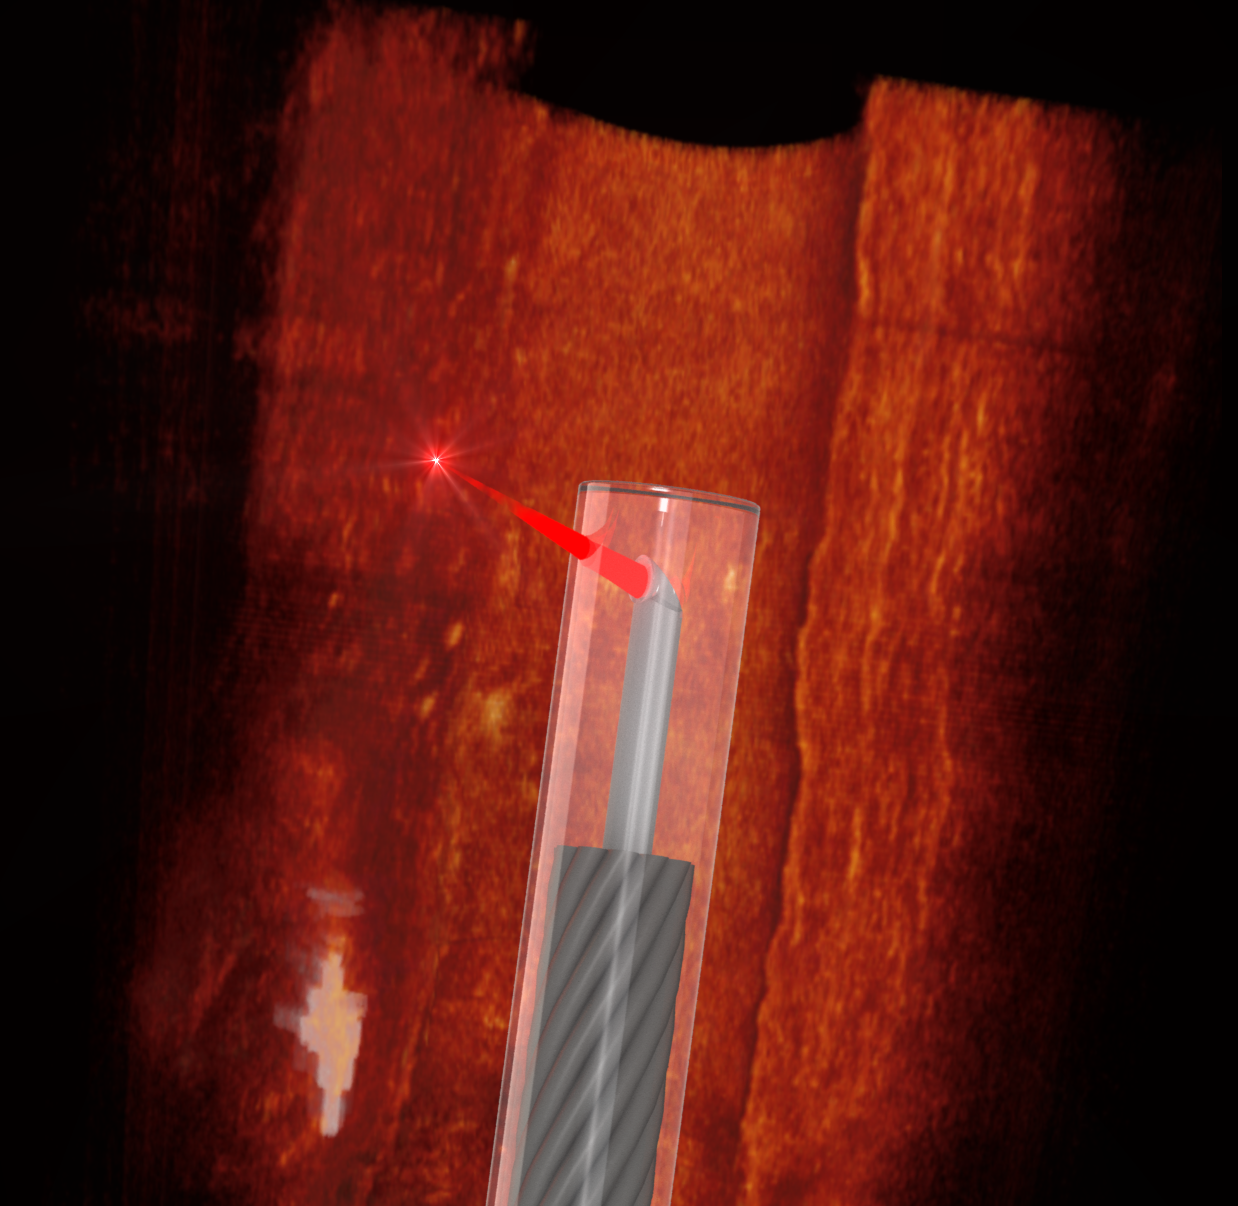 Ultrathin 3D printed endoscope imaging an artery - photo by Simon Thiele and Jiawen Li.